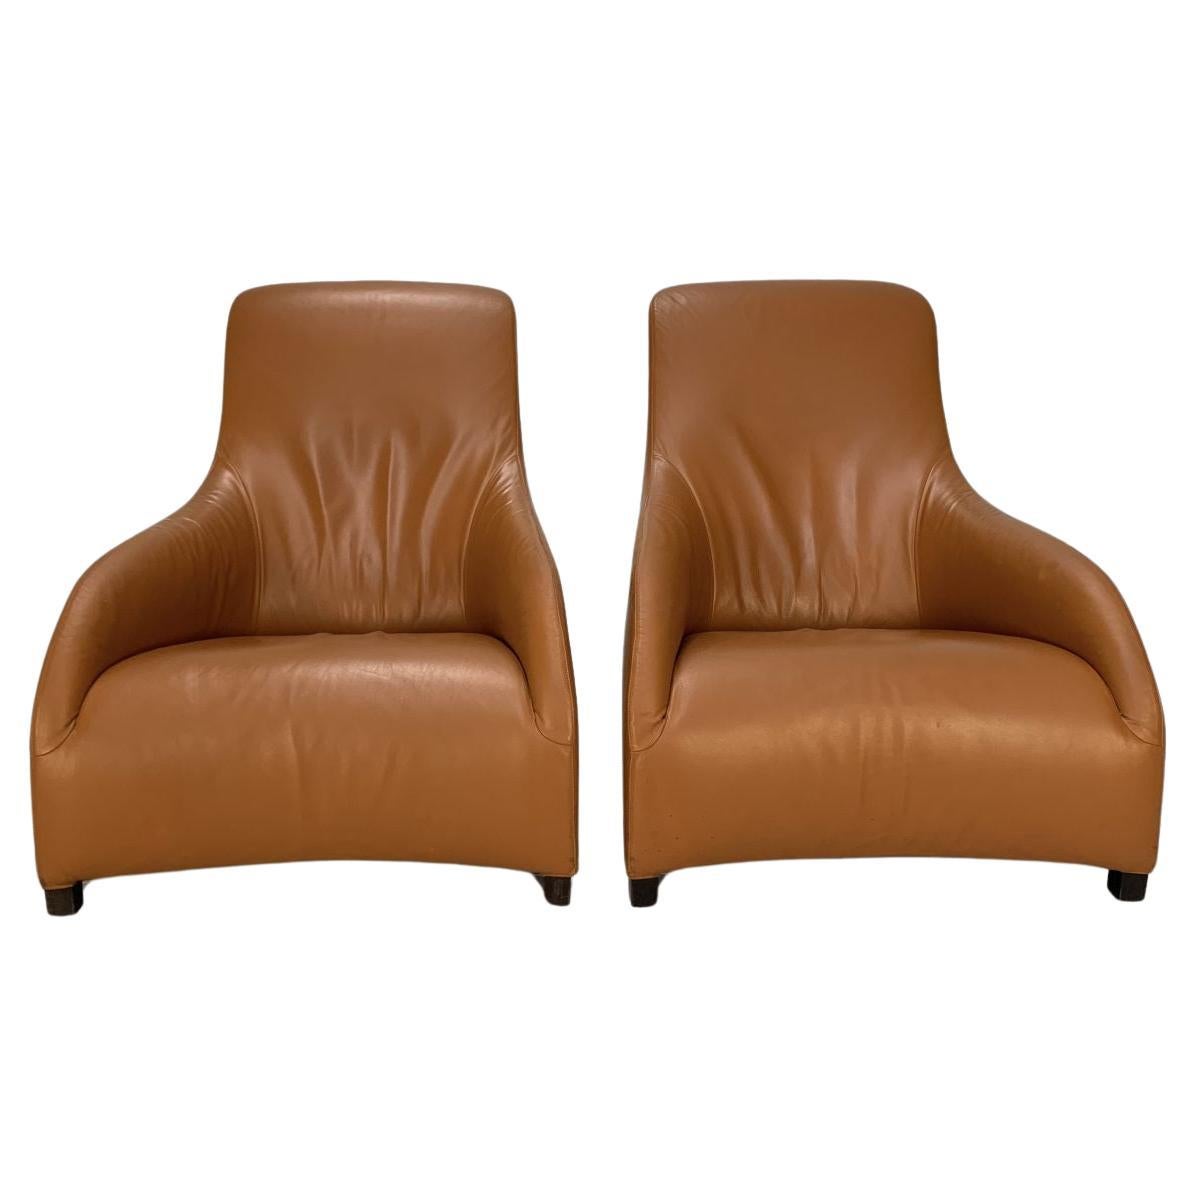 B&B Italia Armchairs – “MAXALTO KALOS 9750” – In Tan Brown “ALFA” Leather  For Sale